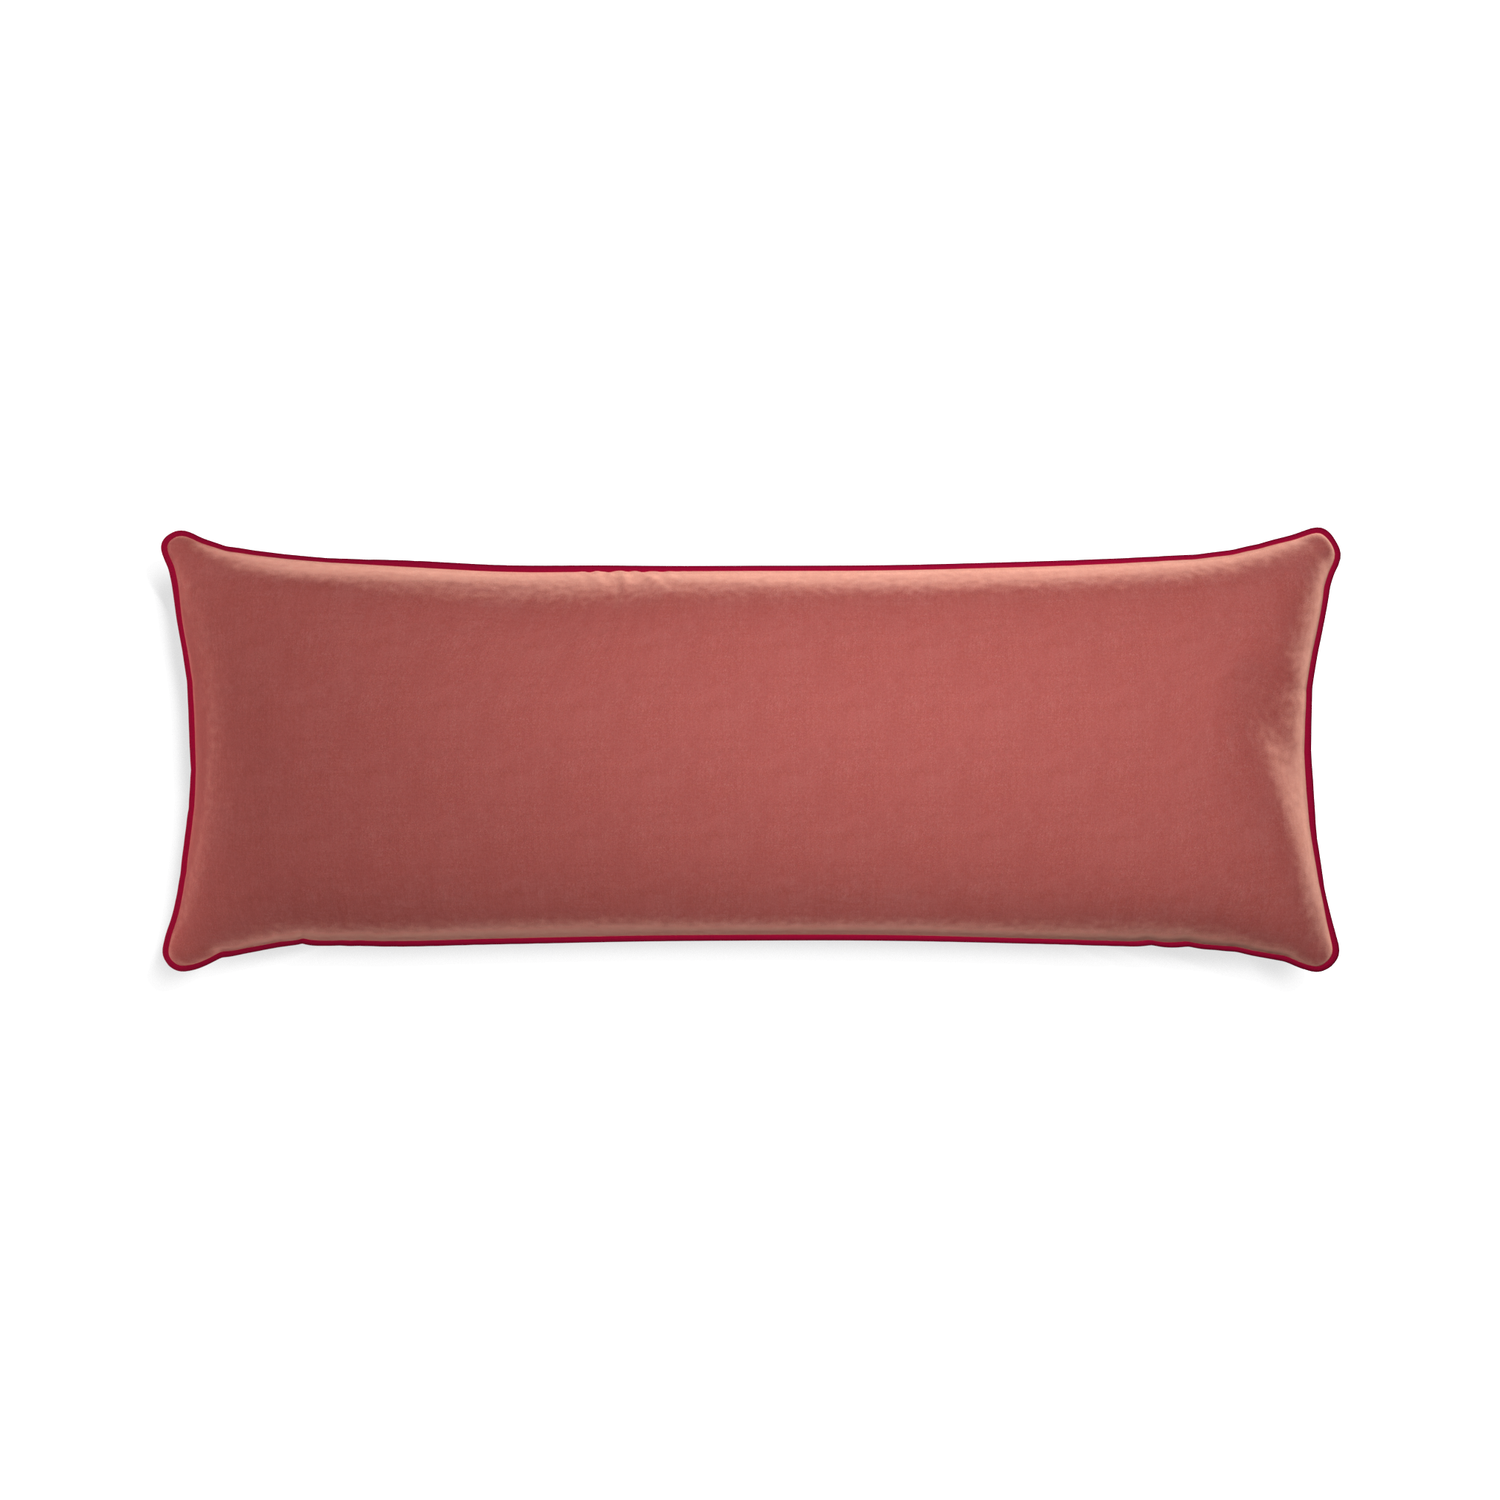 Xl-lumbar cosmo velvet custom pillow with raspberry piping on white background